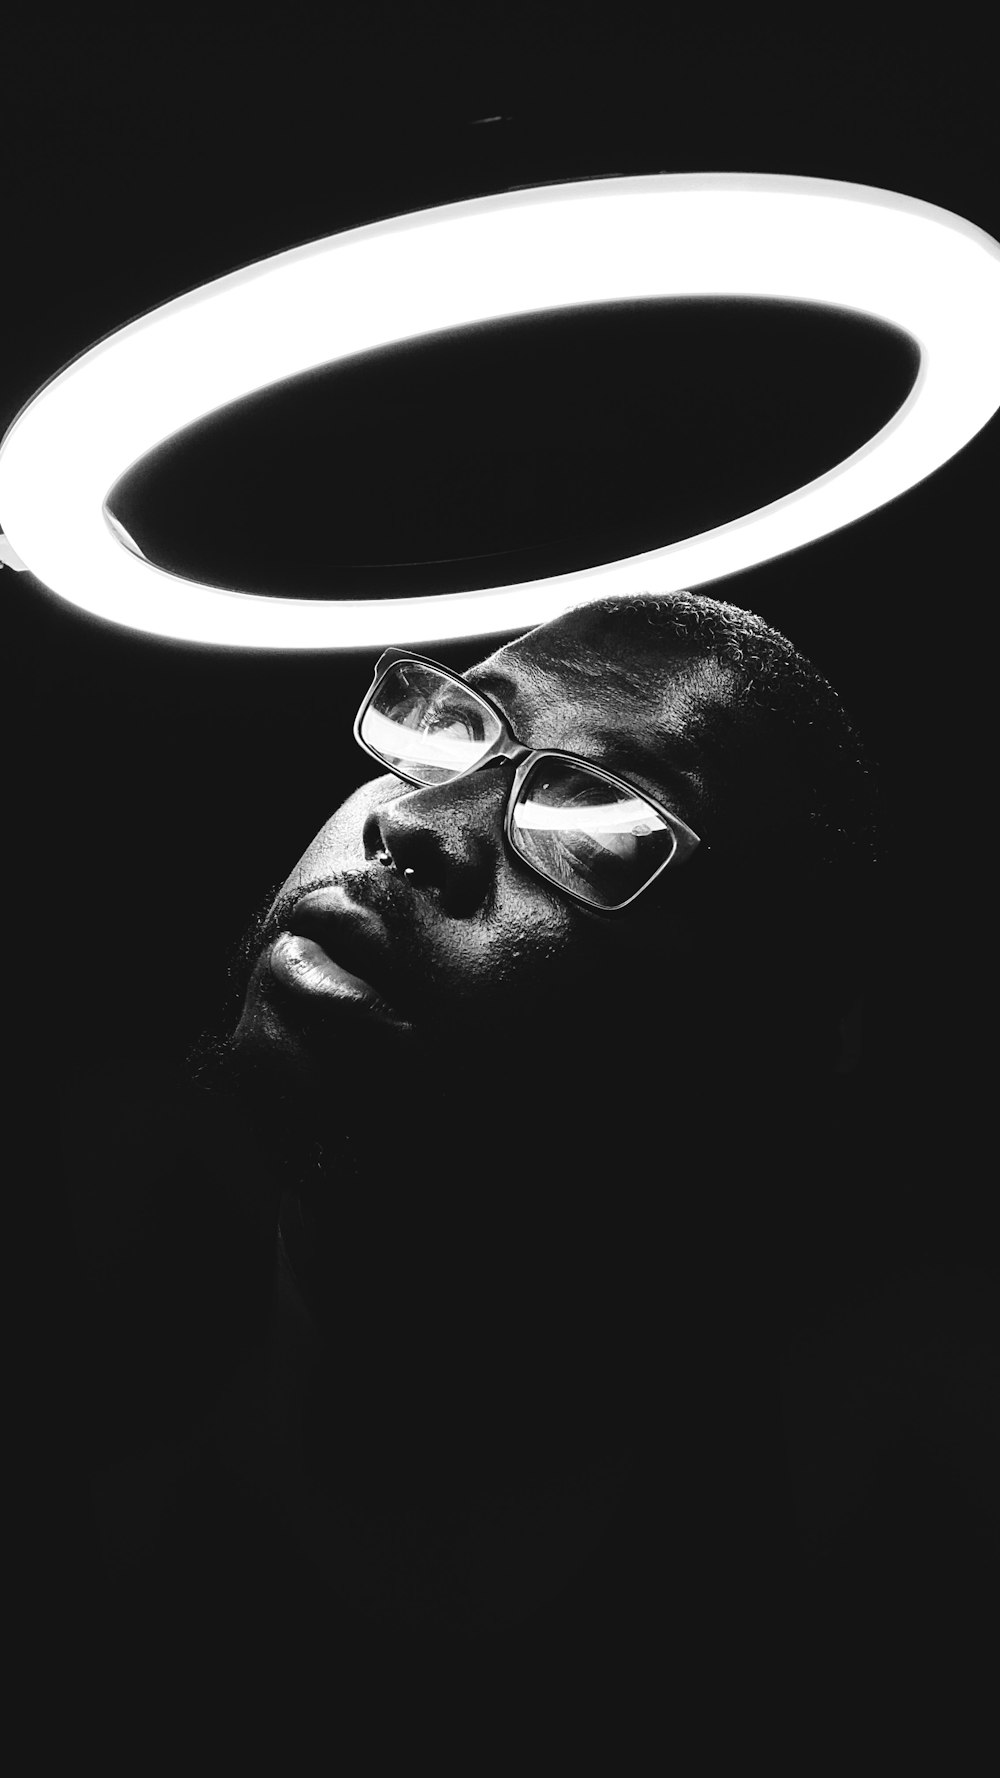 man wearing black framed eyeglasses